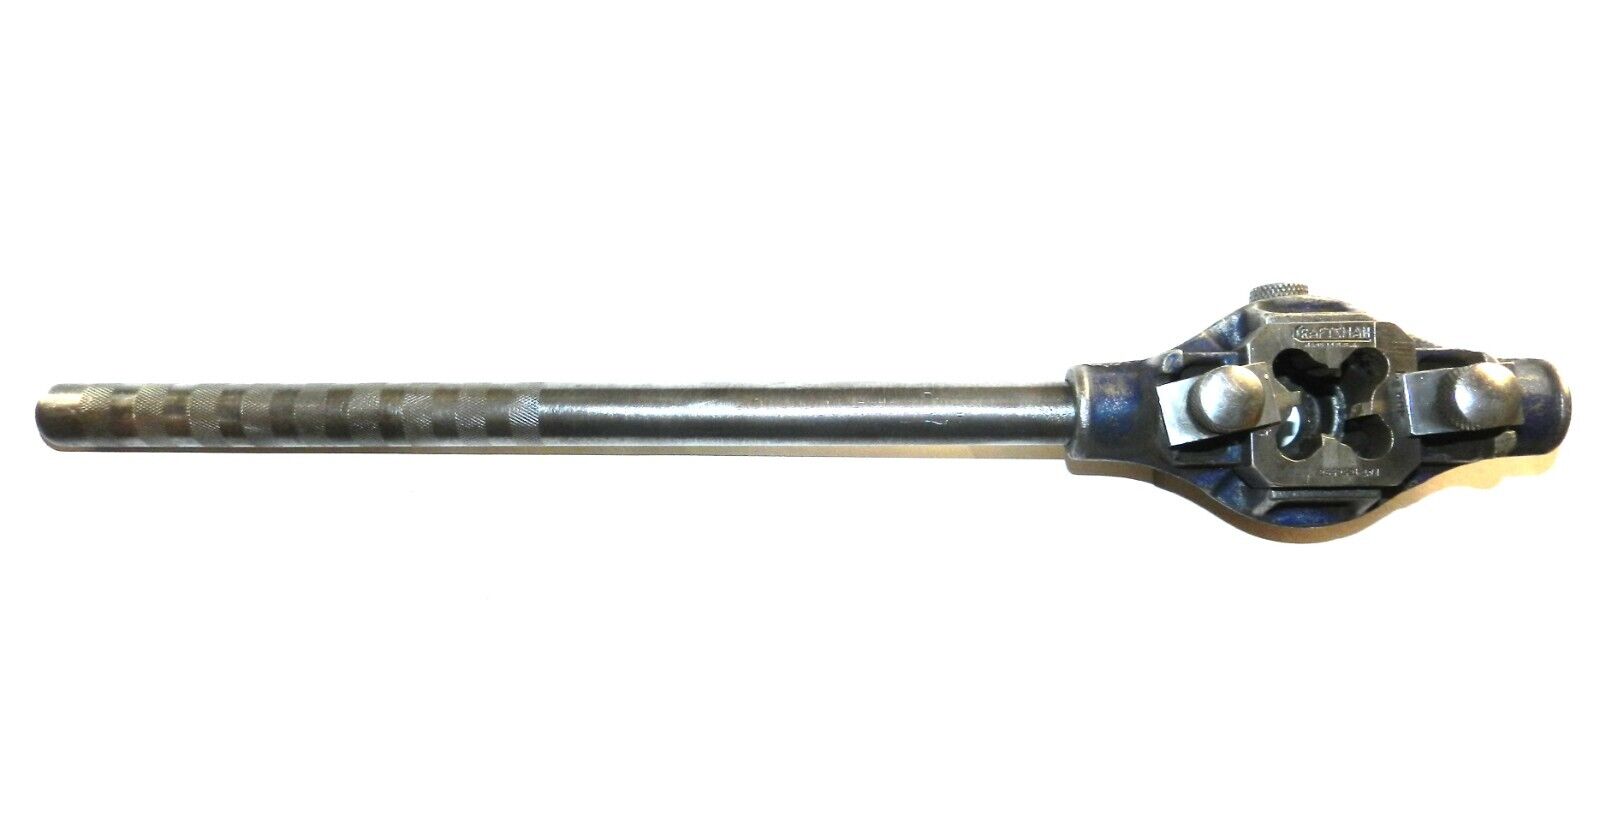 Vintage 1923 Craftsman Tap Handle Wrench with 1/2-14 NPT Die & 1/2 Pipe Insert